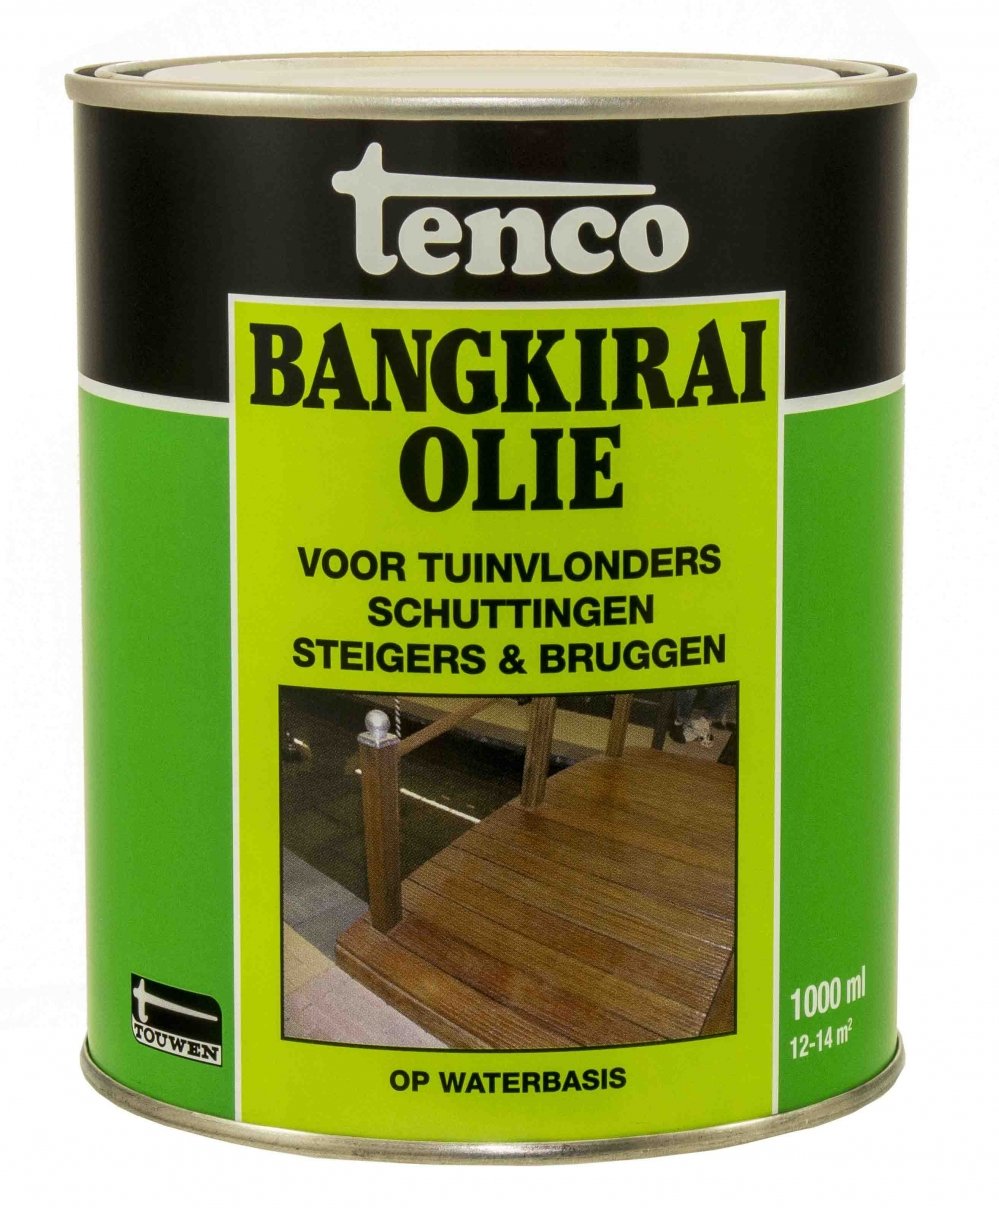 Bankirai olie - tenco-bangkiraiolie-1ltr-verfcompleet.nl